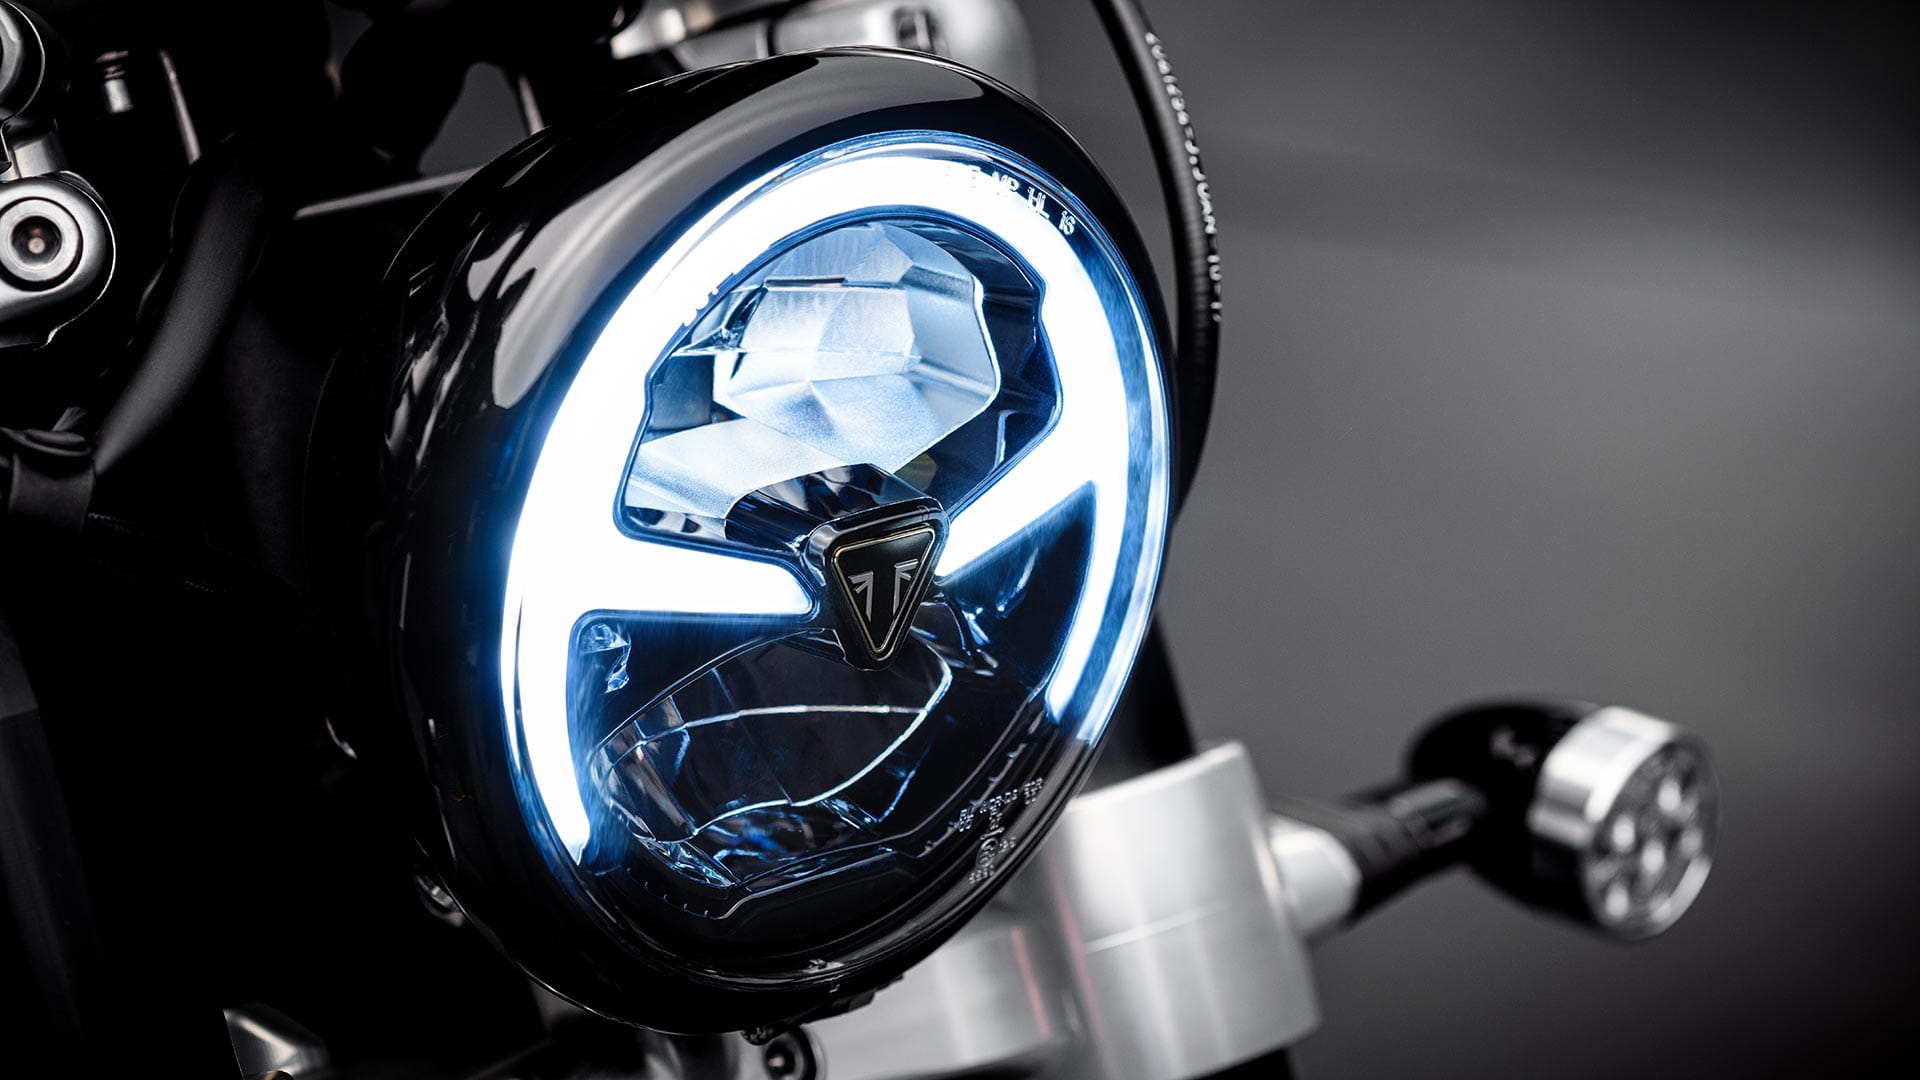 Close-up shot of the Triumph Bobber TFC's LED headlight